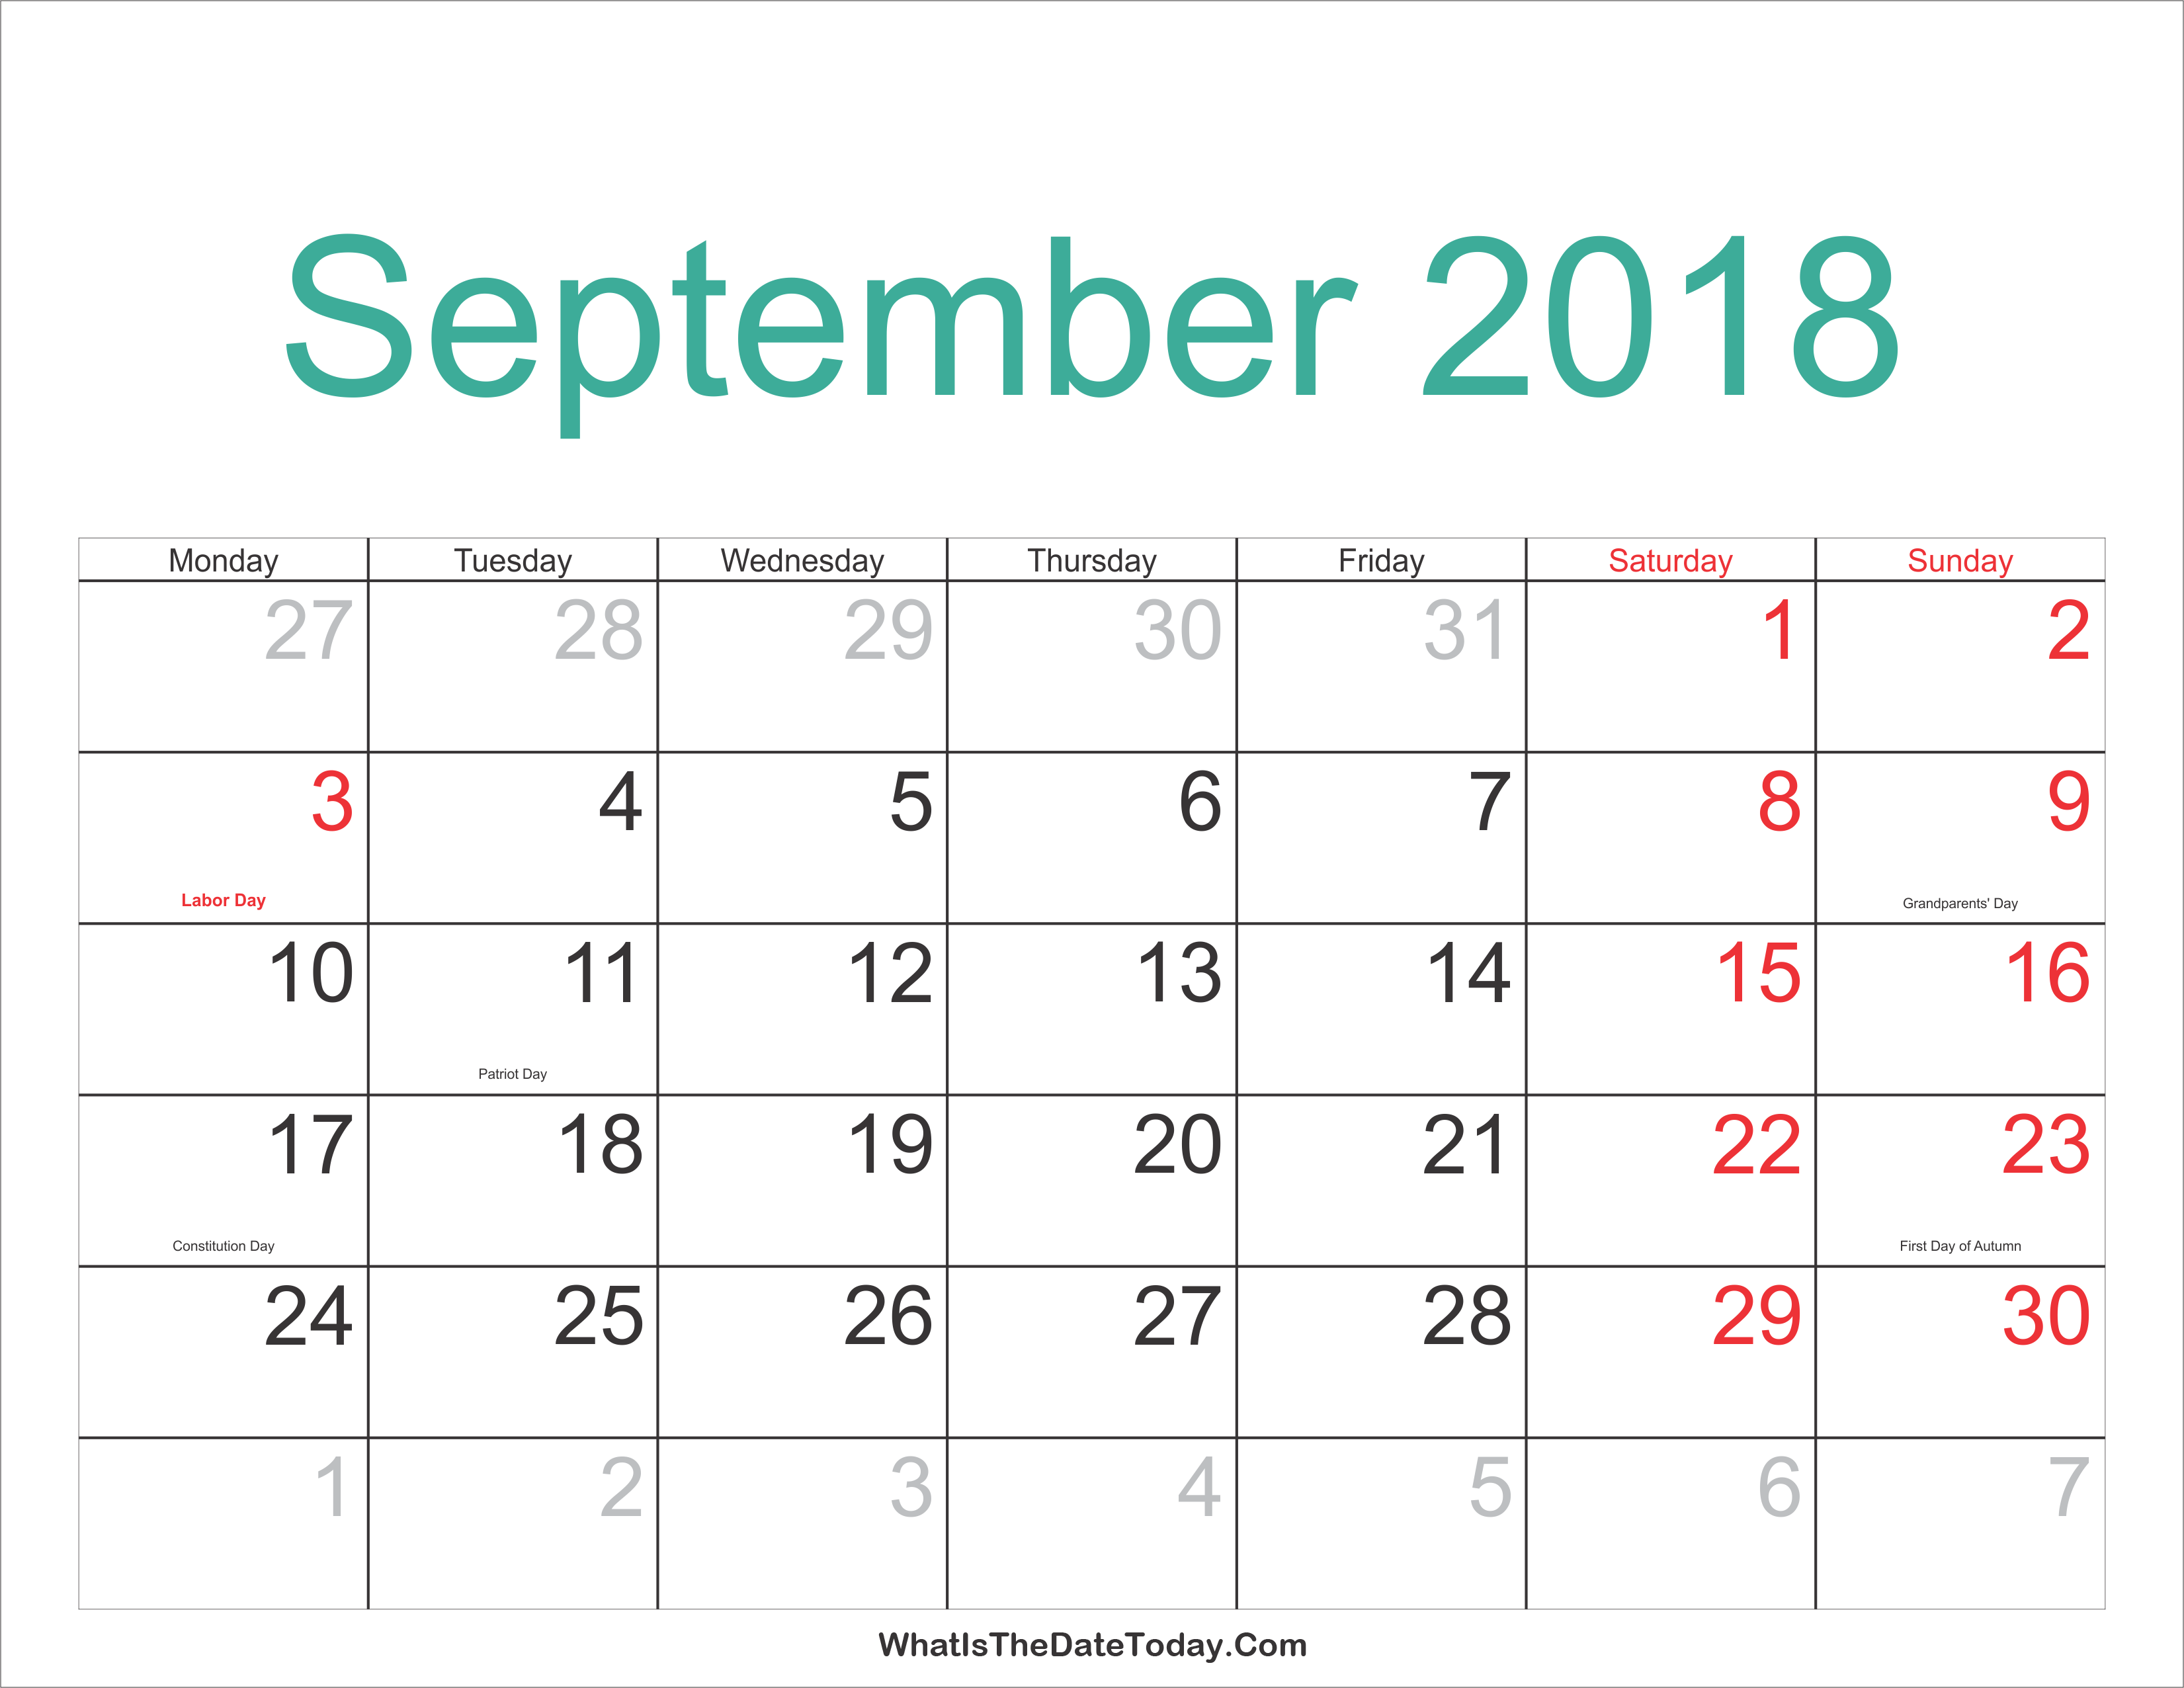 Category 2018 Calendar 2018 September Calendar Week Numbers Medium 370x210 Ypqurv